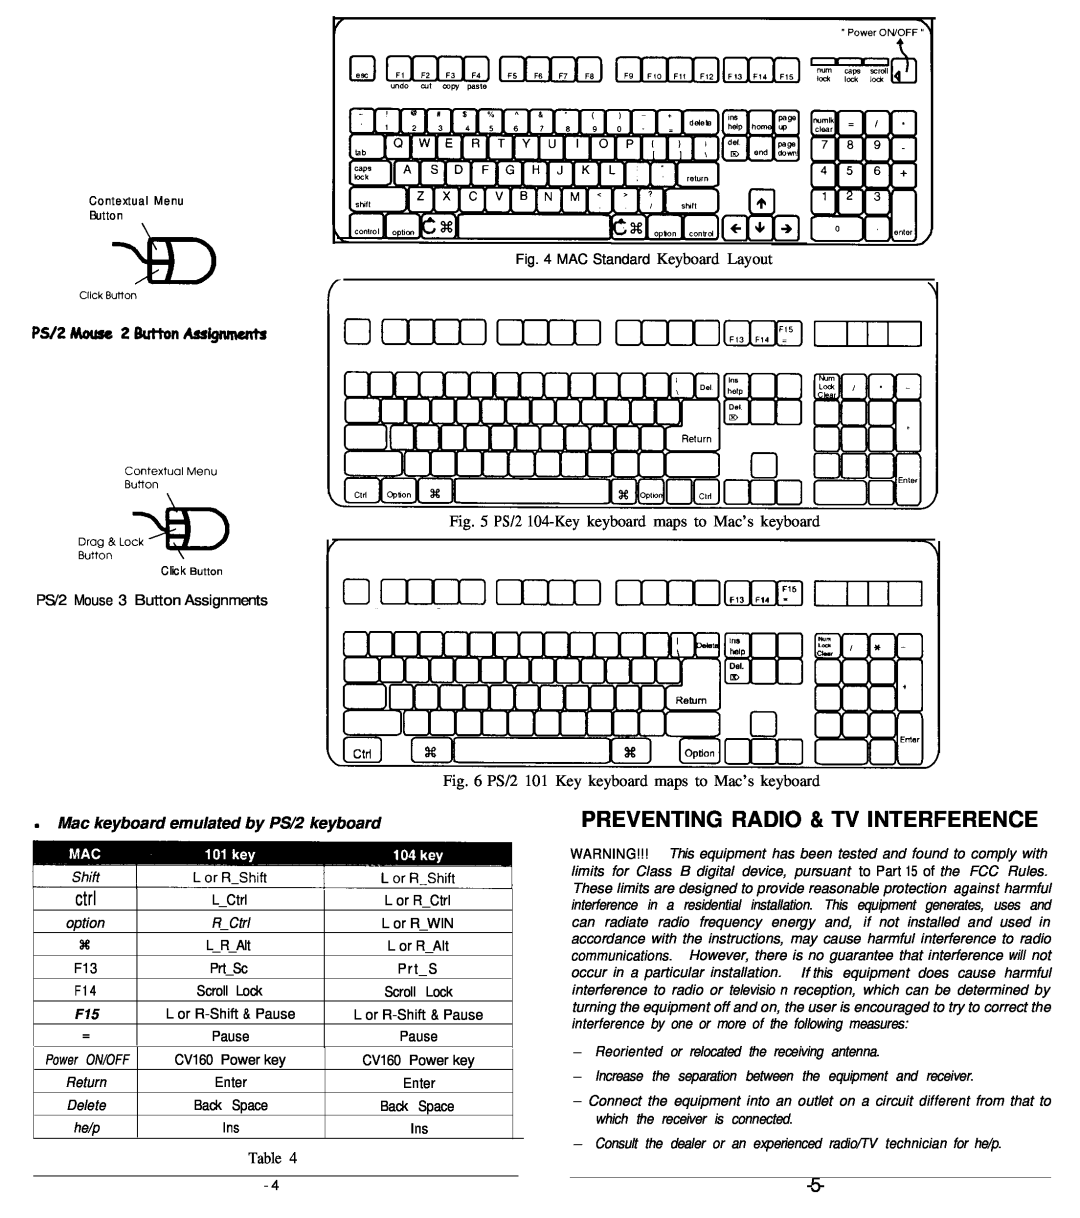 QVS CV-160 warranty Preventing Radio & Tv Interference, ctrl, PS/2 104-Key keyboard maps to Mac’s keyboard 